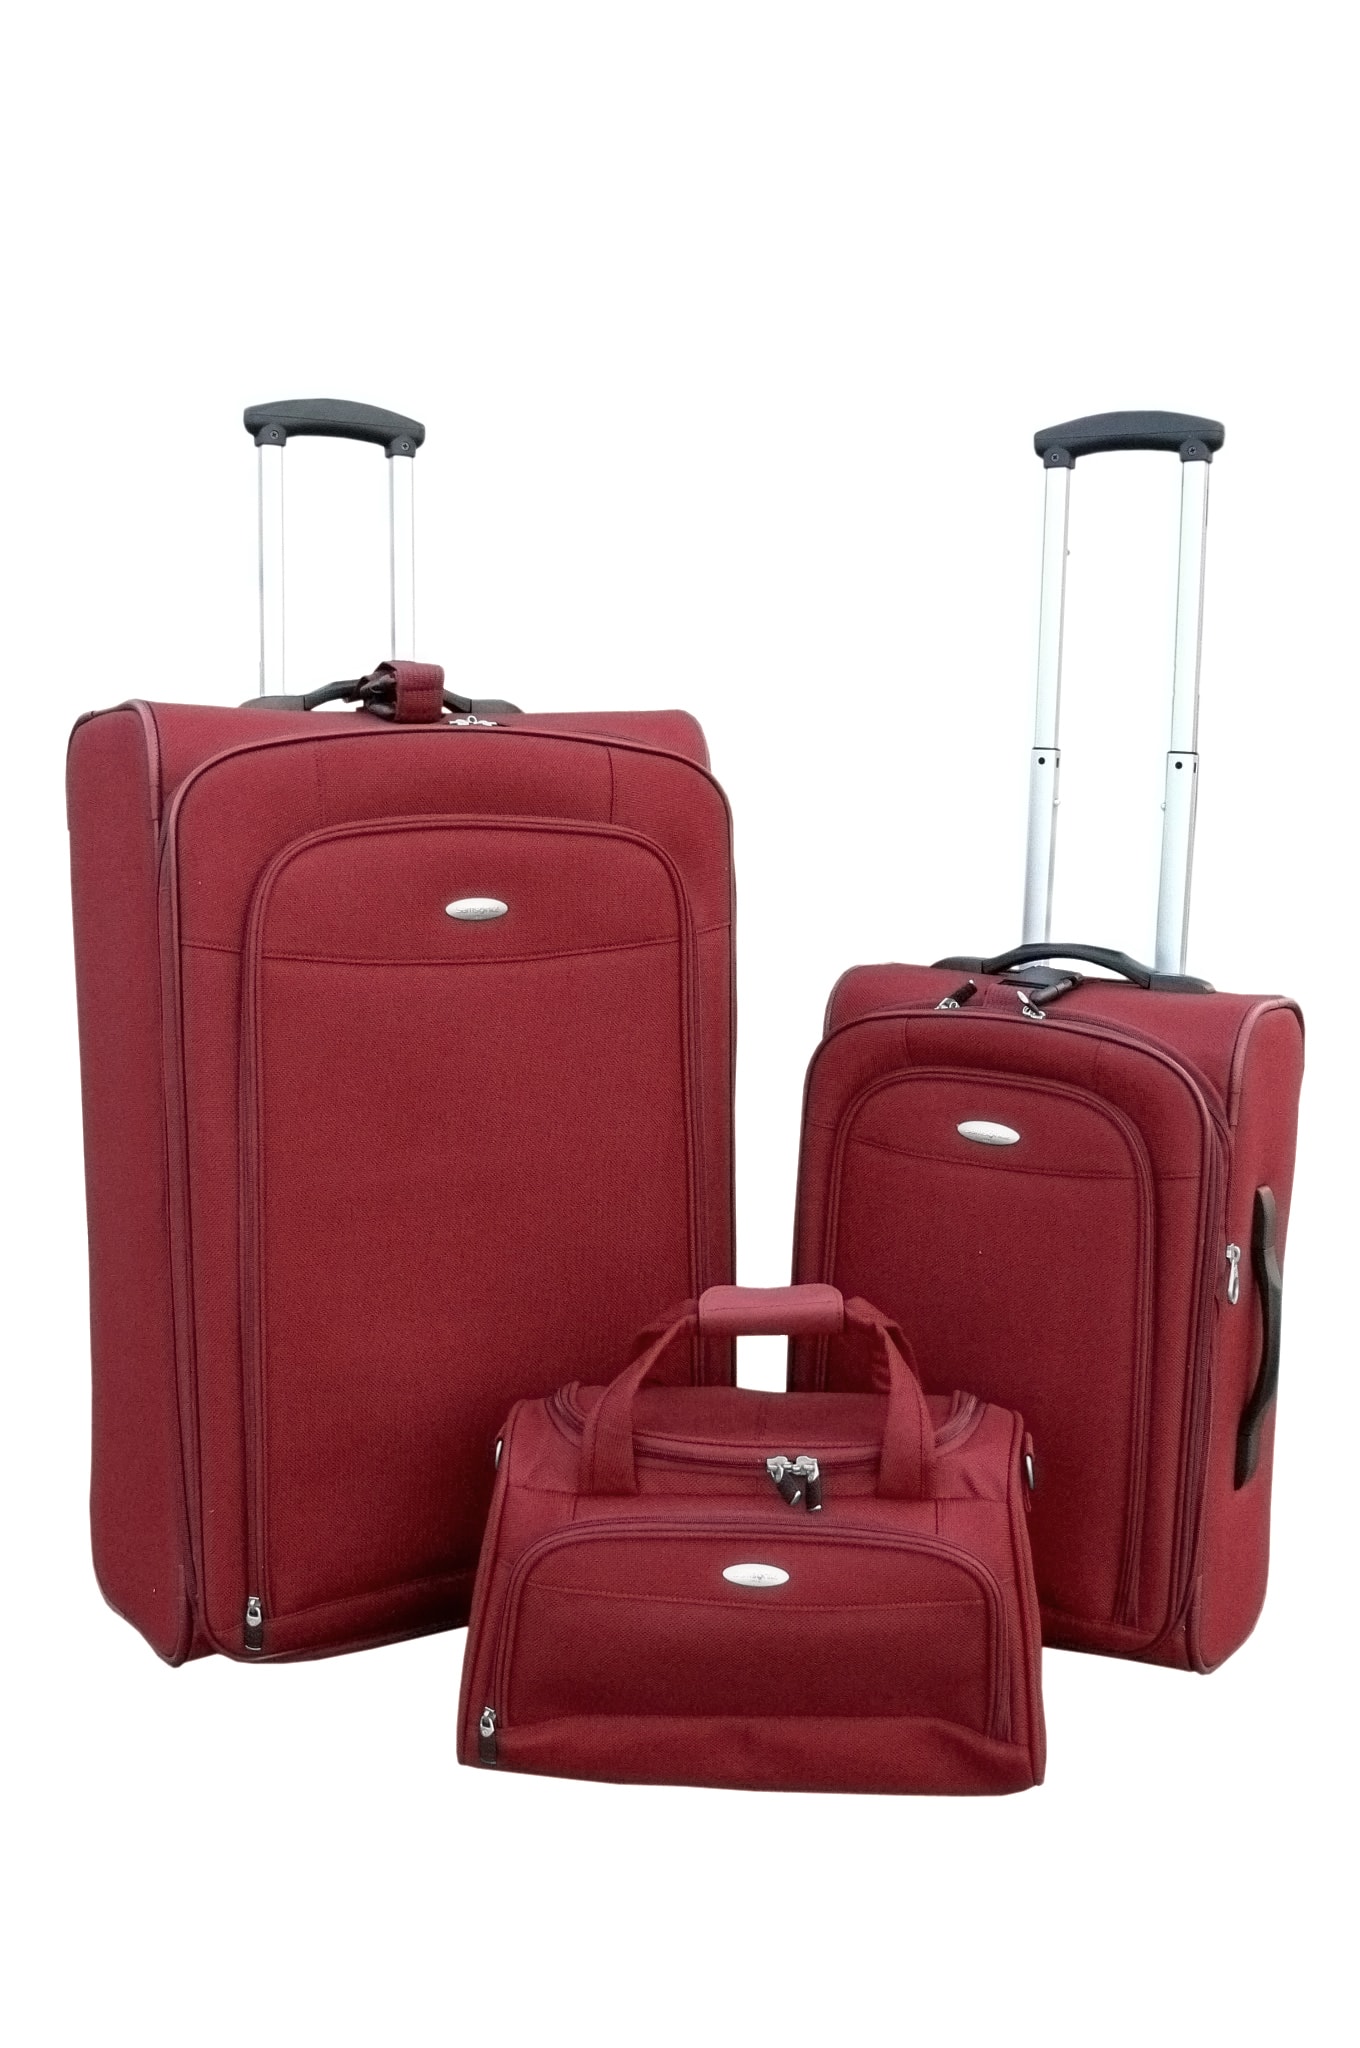 Samsonite Elevation 3 pack Soft Side Luggage Set - 10543900 - 0 Shopping - Great ...